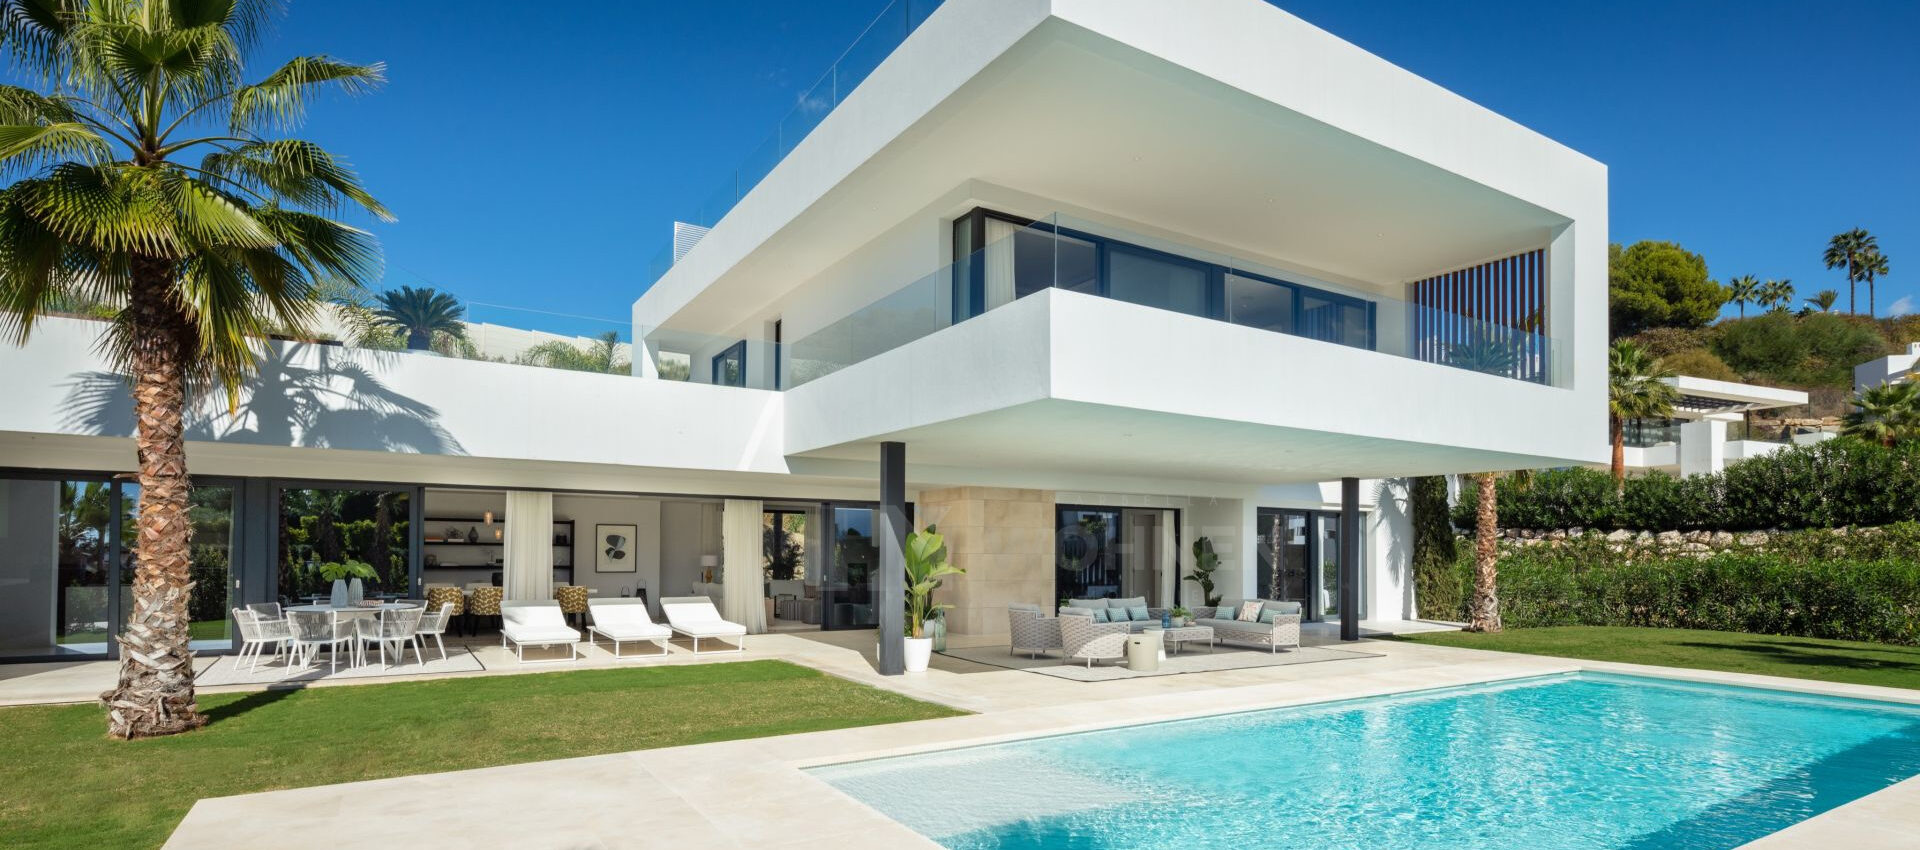 Brand new contemporary villa located in Nueva Andalucía